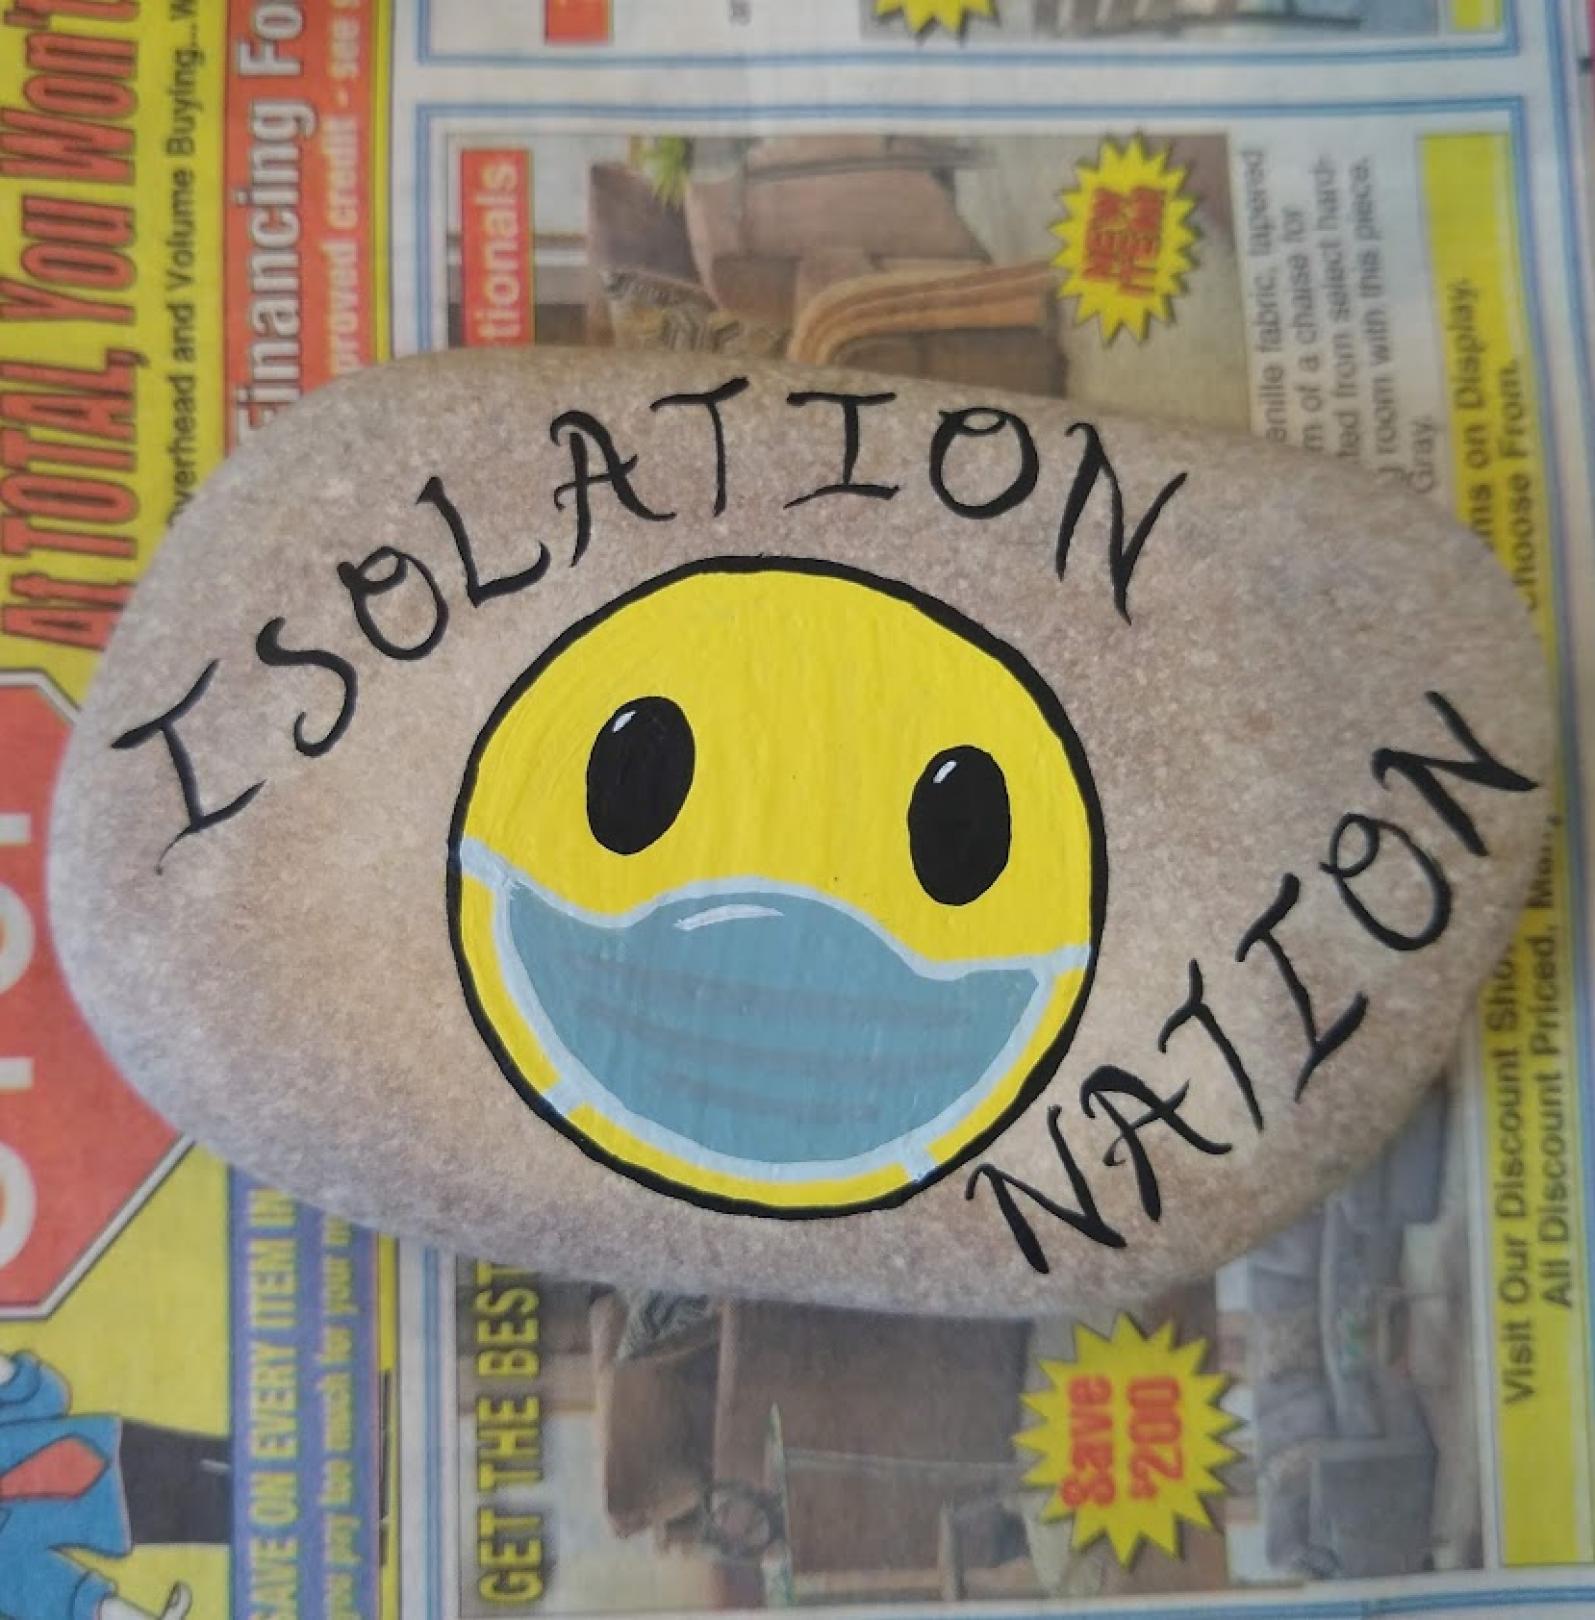 Painted rock saying "isolation nation"